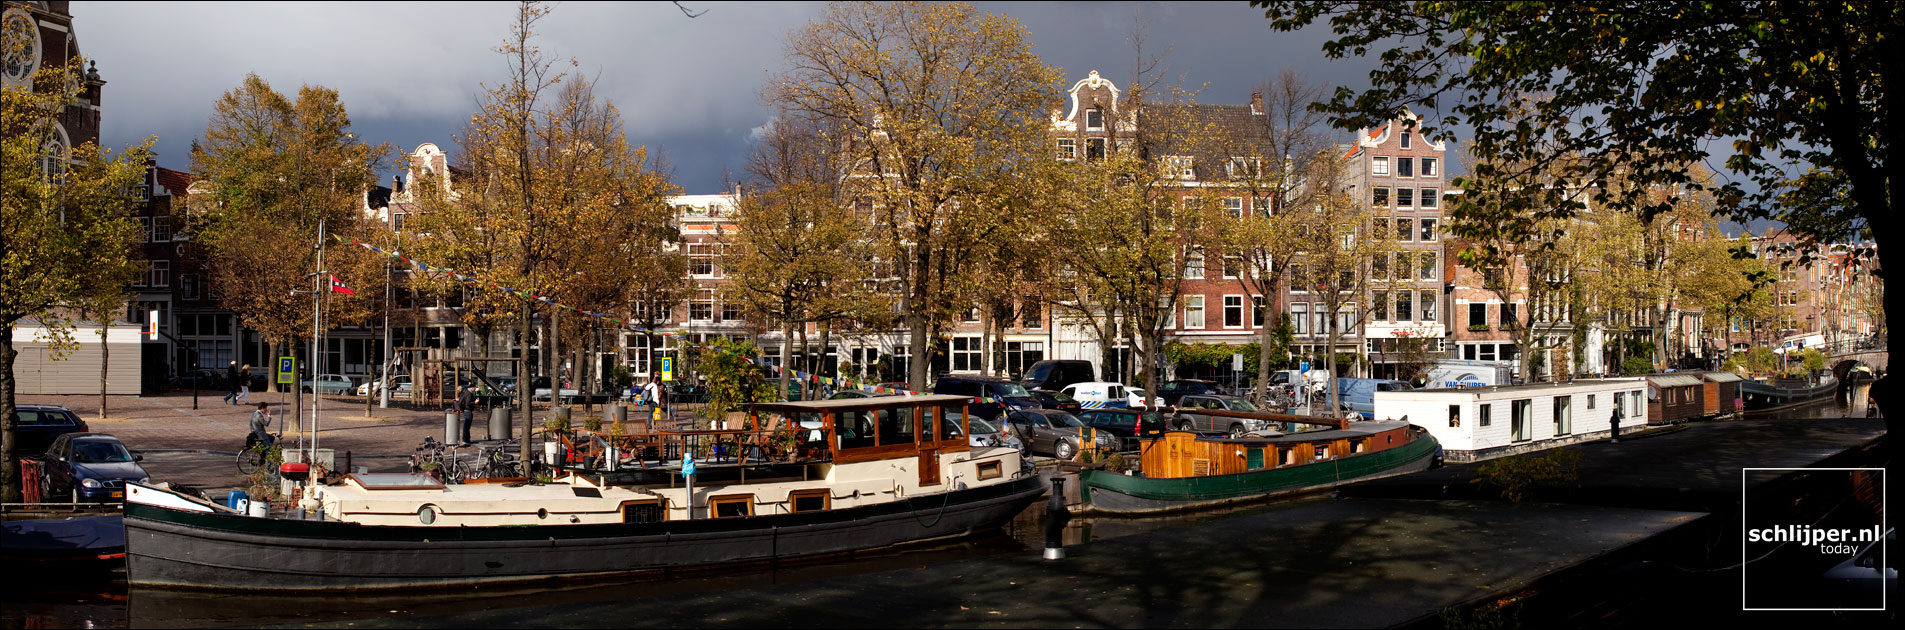 Nederland, Amsterdam, 20 oktober 2011